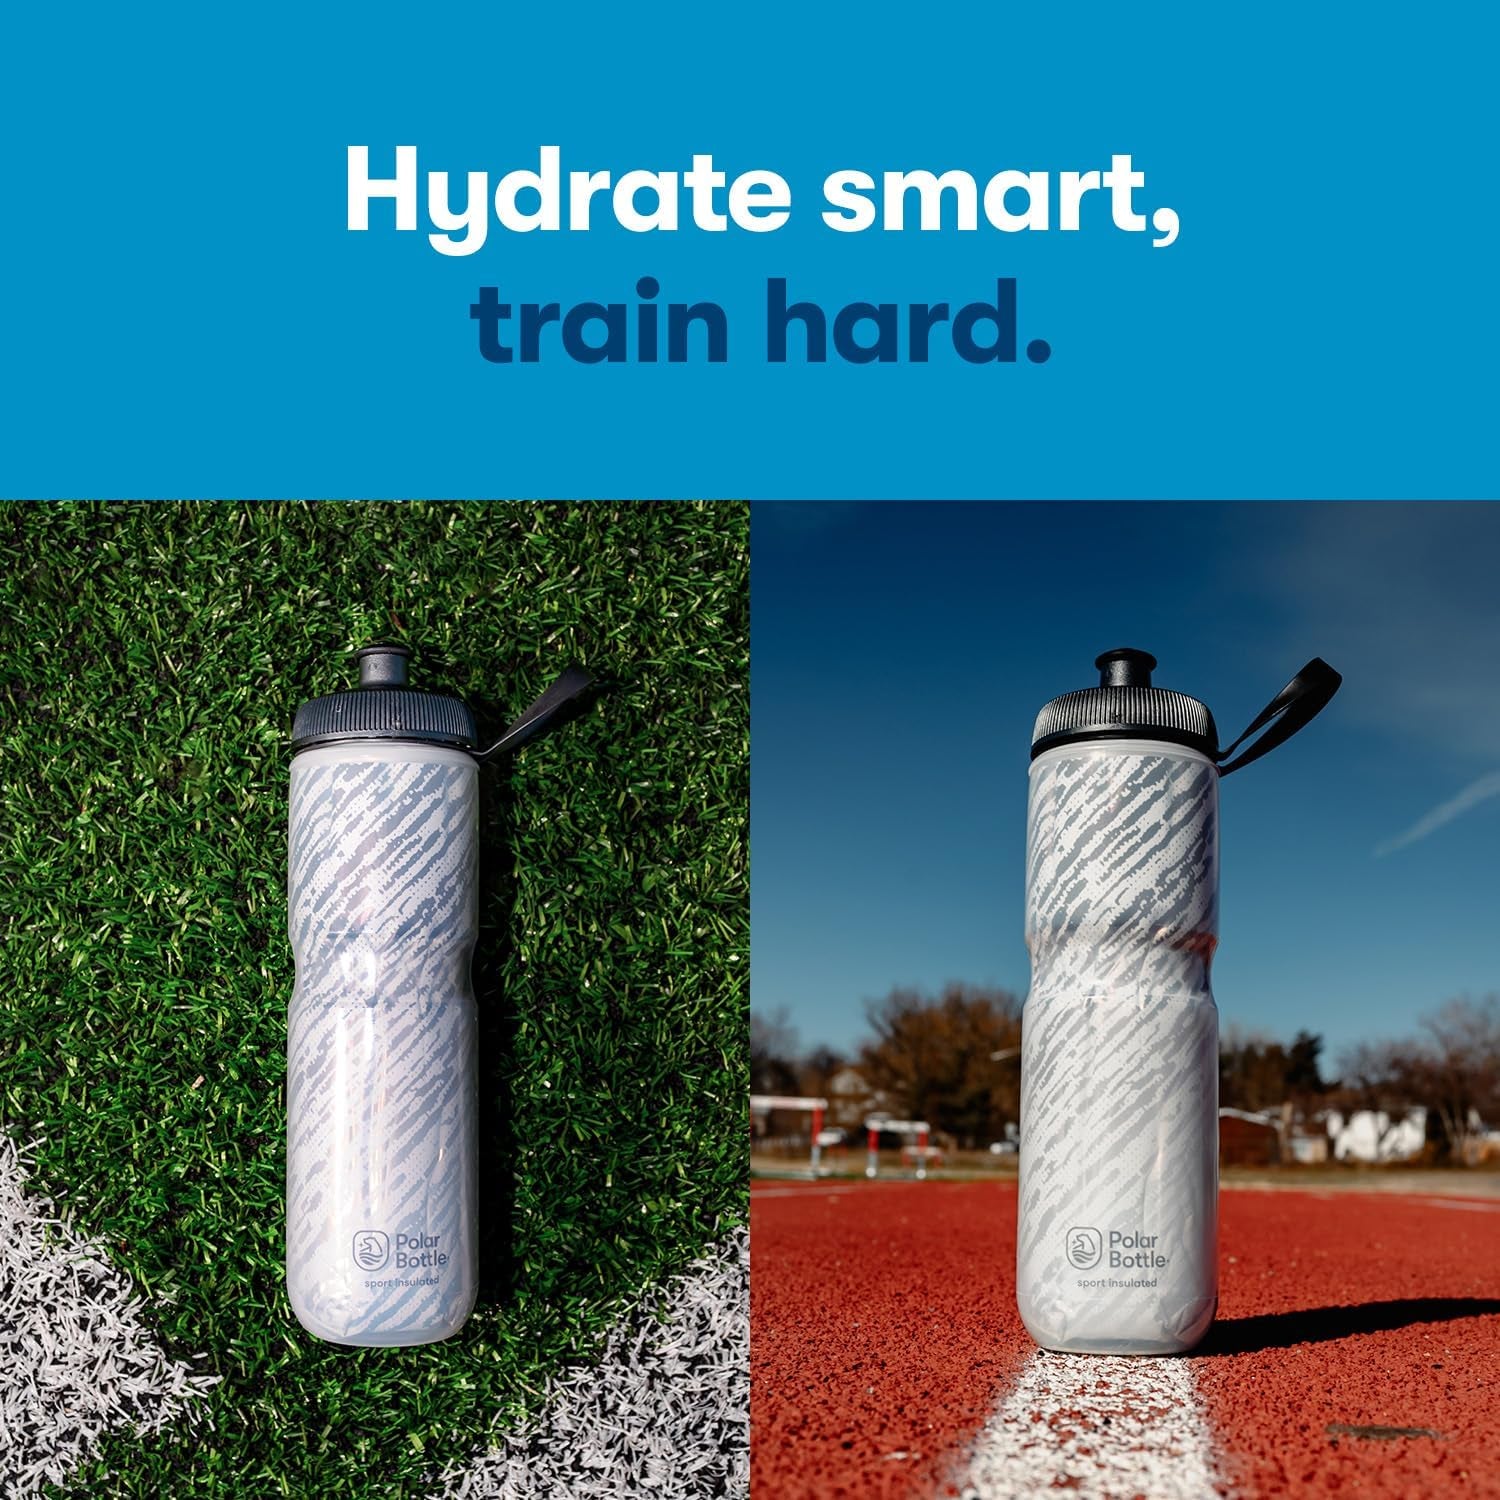 Sport Insulated Water Bottle - Leak Proof Water Bottles Keep Water Cooler 2X Longer than a Regular Reusable Water Bottle -Bpa-Free, Sport & Bike Squeeze Bottle with Handle